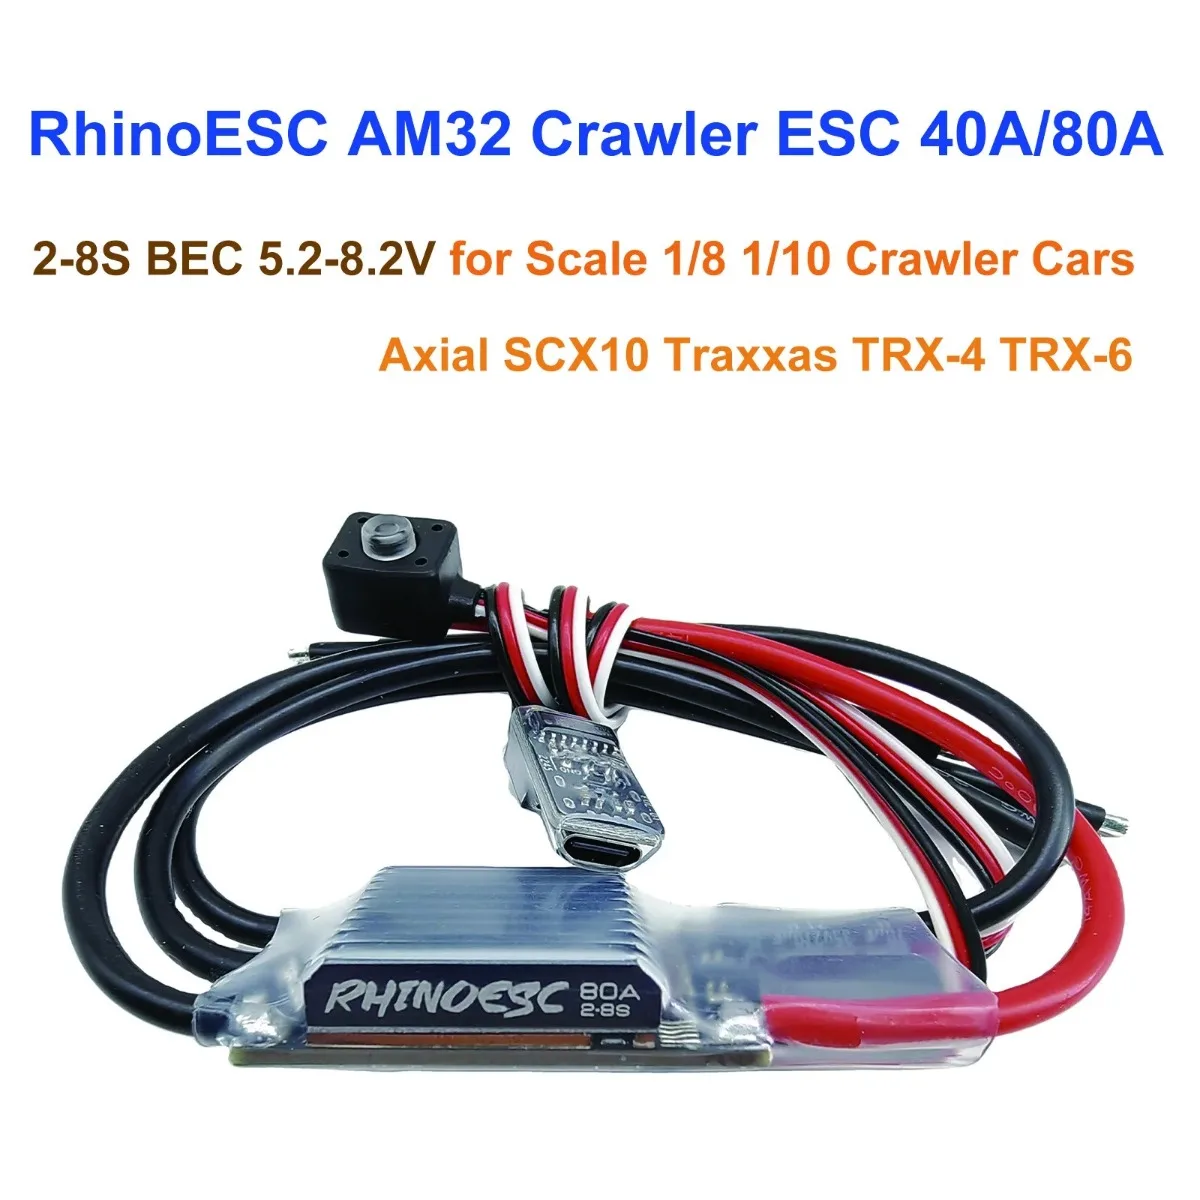 

RhinoESC Crawler ESC AM32 40A 80A 2-8S BEC 5.20-8.2V adjustable for Scale 1/8 1/10 Crawler Cars Axial SCX10 Traxxas TRX-4 TRX-6